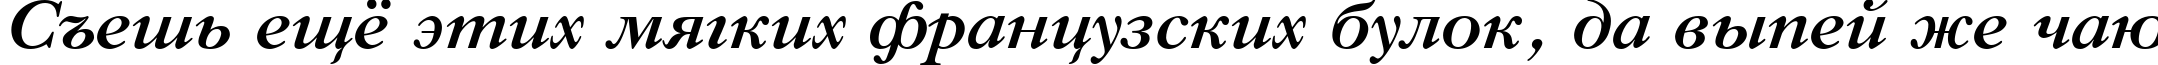 Пример написания шрифтом GazetaTitul Bold Italic текста на русском